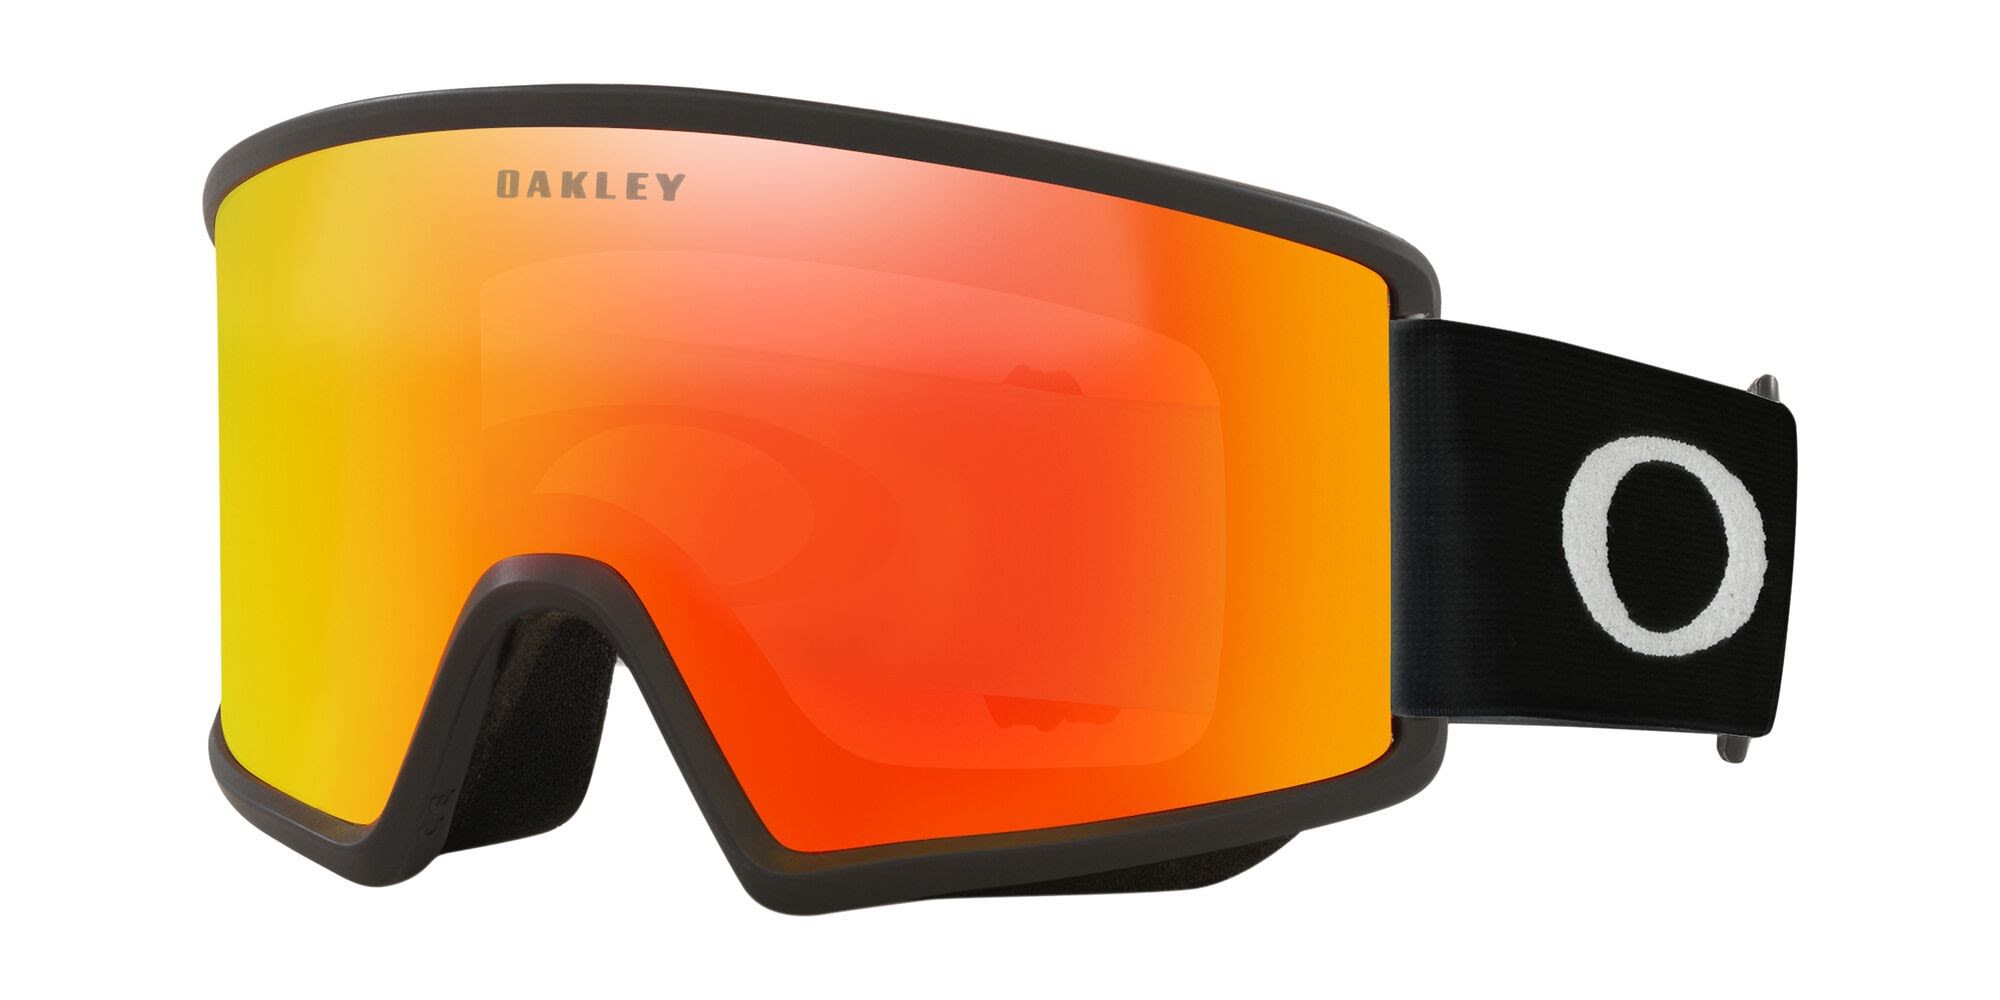 Oakley Target Line S II Schwarz- Skibrillen- Grsse One Size - Farbe Matte Black - Fire Iridium